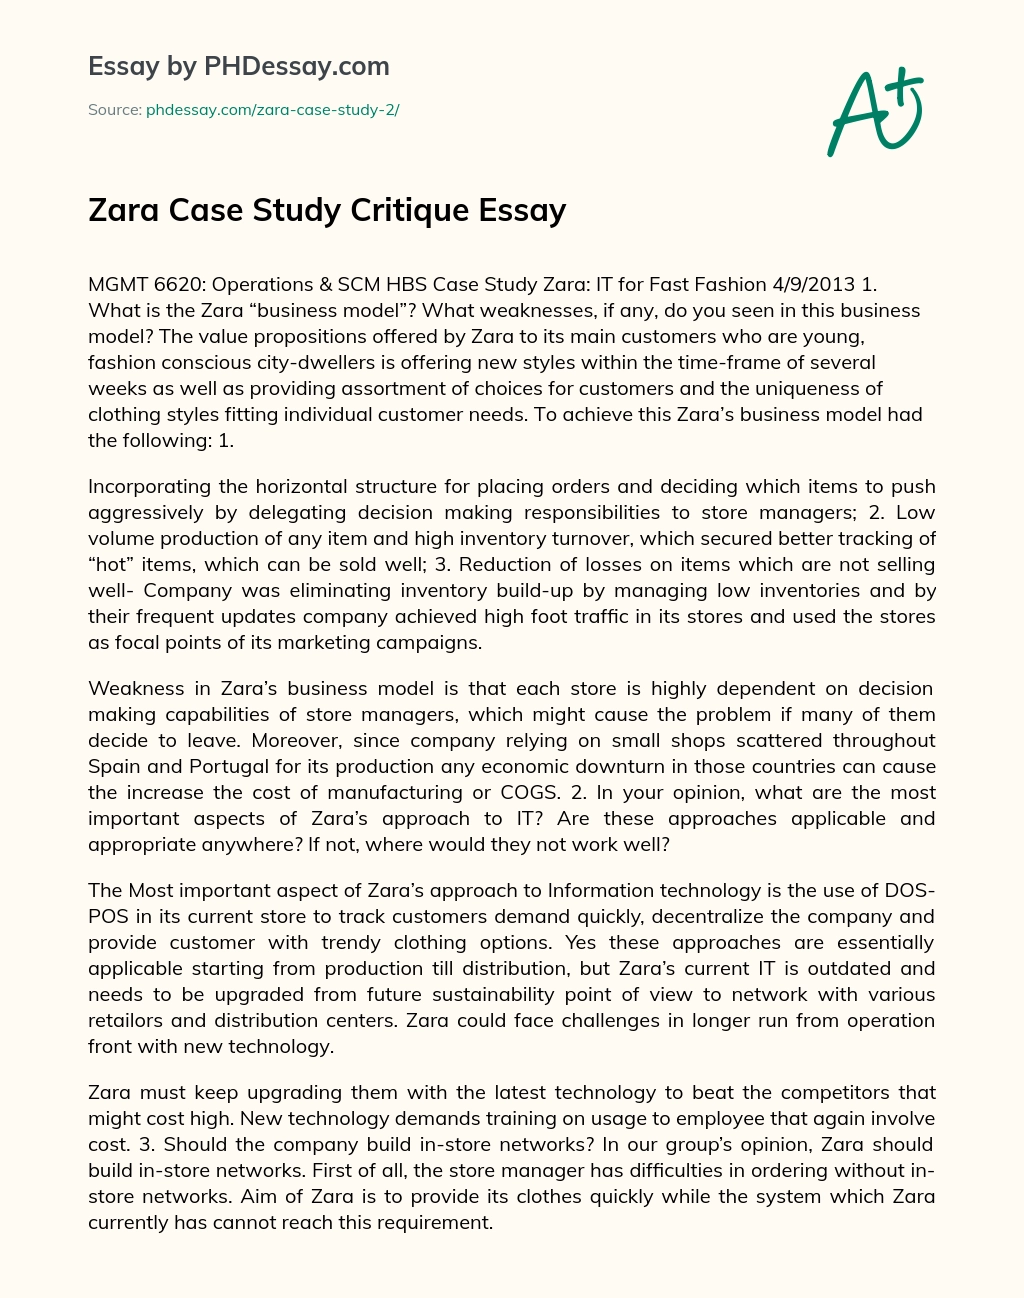 Zara Case Study Critique Essay essay